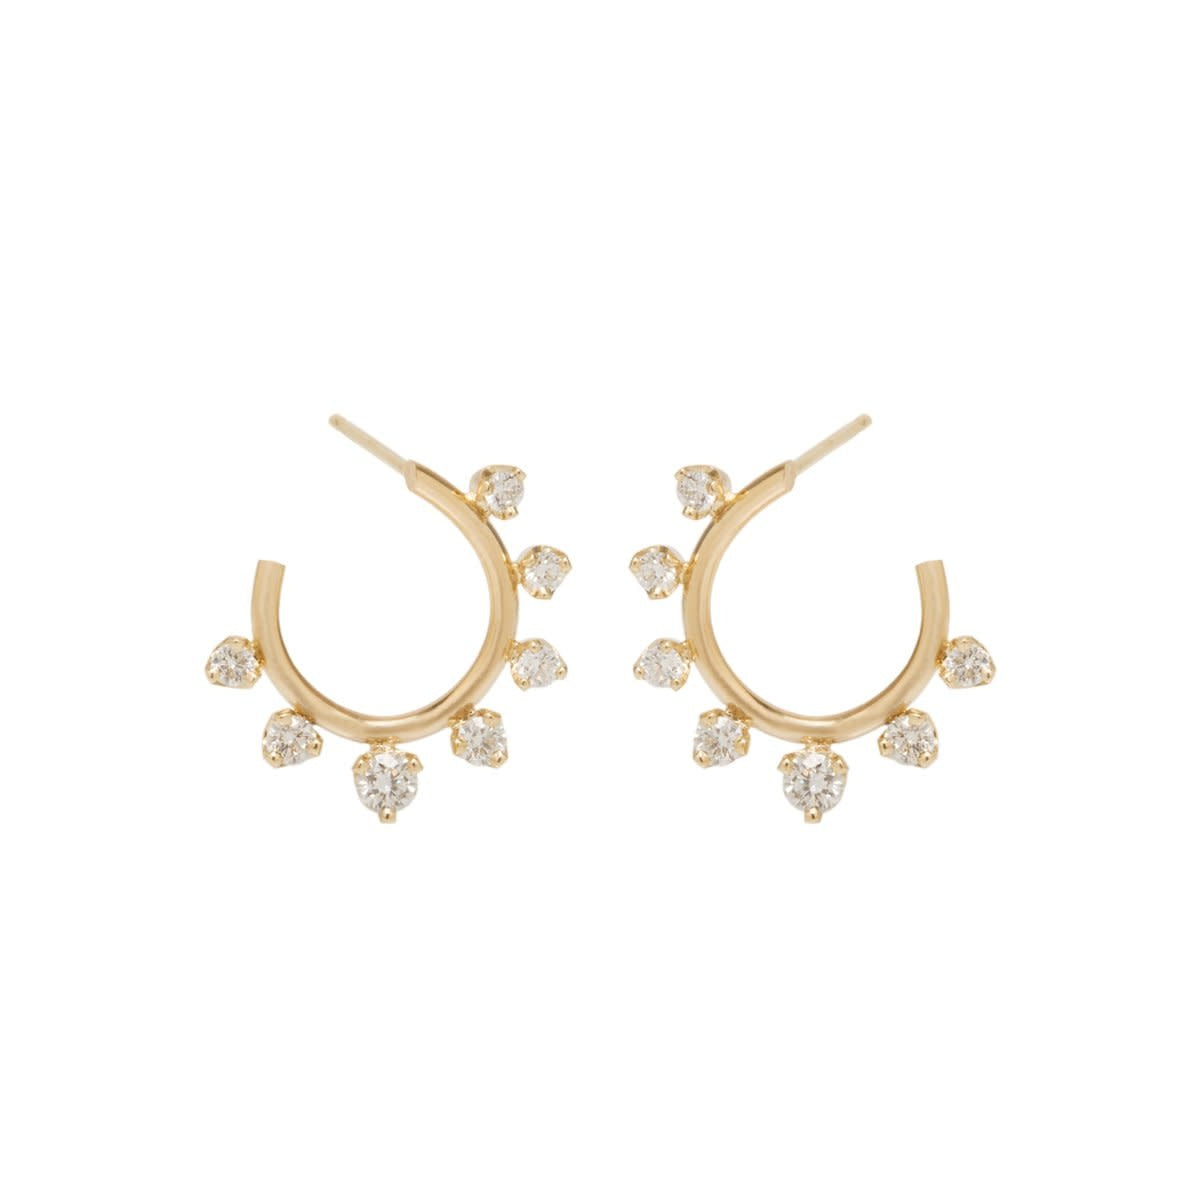 Susan Saffron Jewelry | Dallas Jewelry Boutique, Lovers Lane